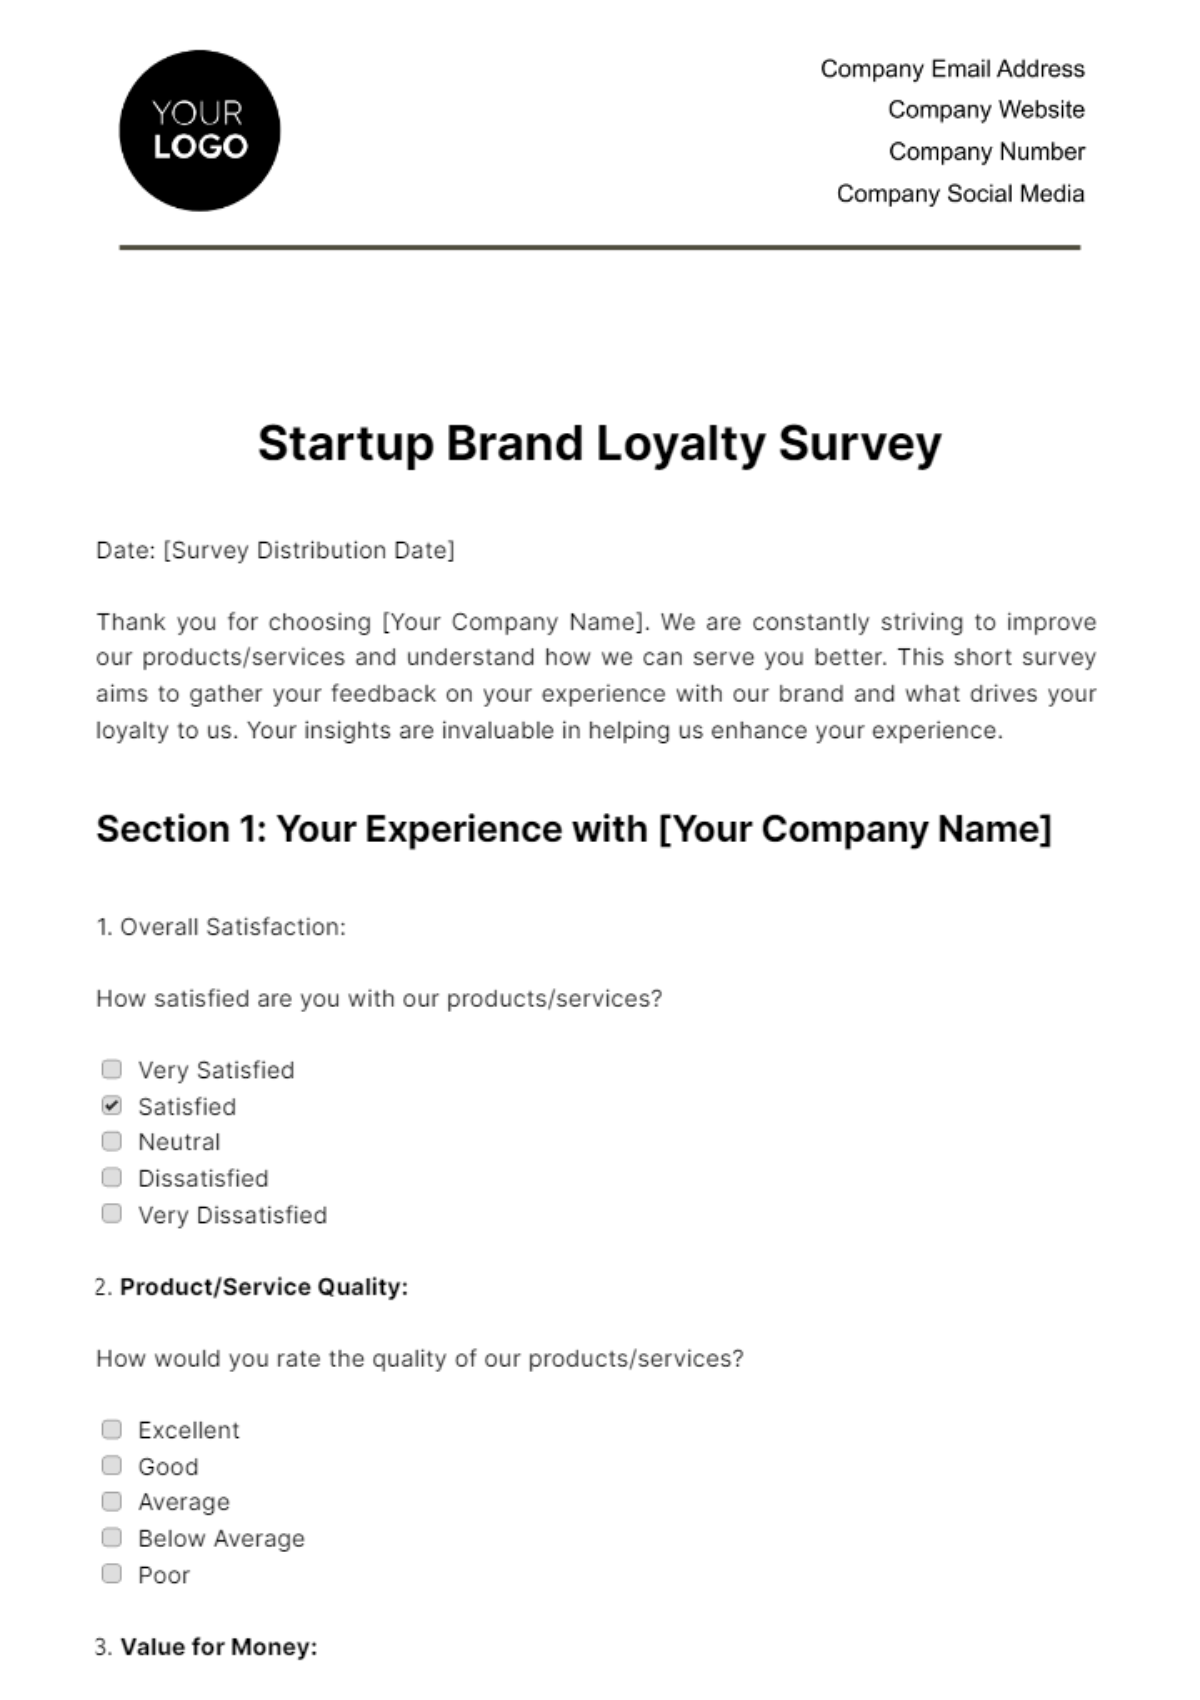 Startup Brand Loyalty Survey Template